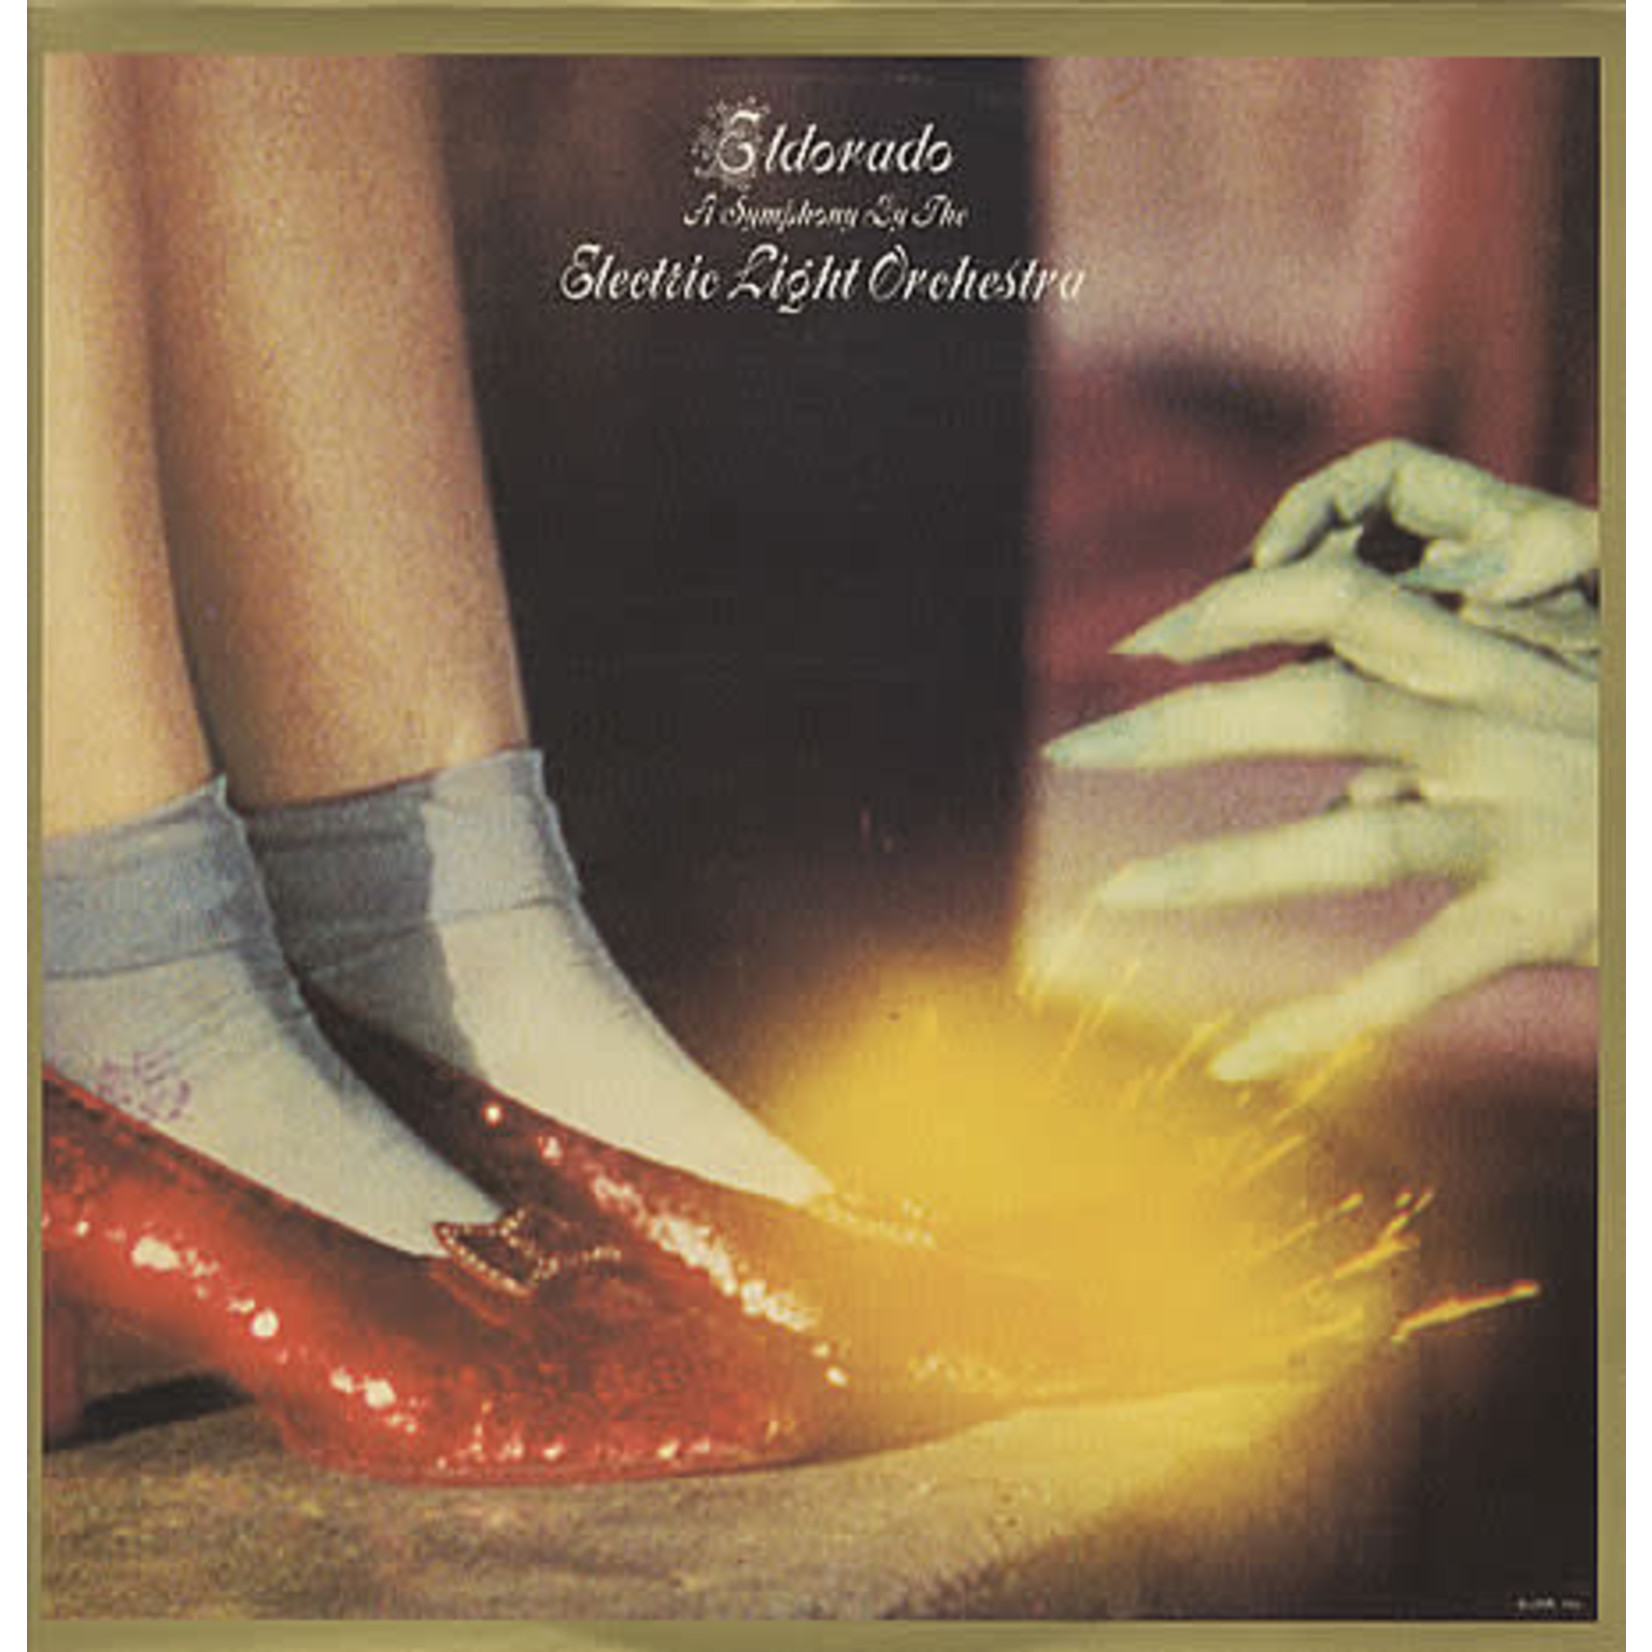 Electric Light Orchestra Electric Light Orchestra – Eldorado (VG, LP, United Artists Records – UA-LA339-G, 1974)